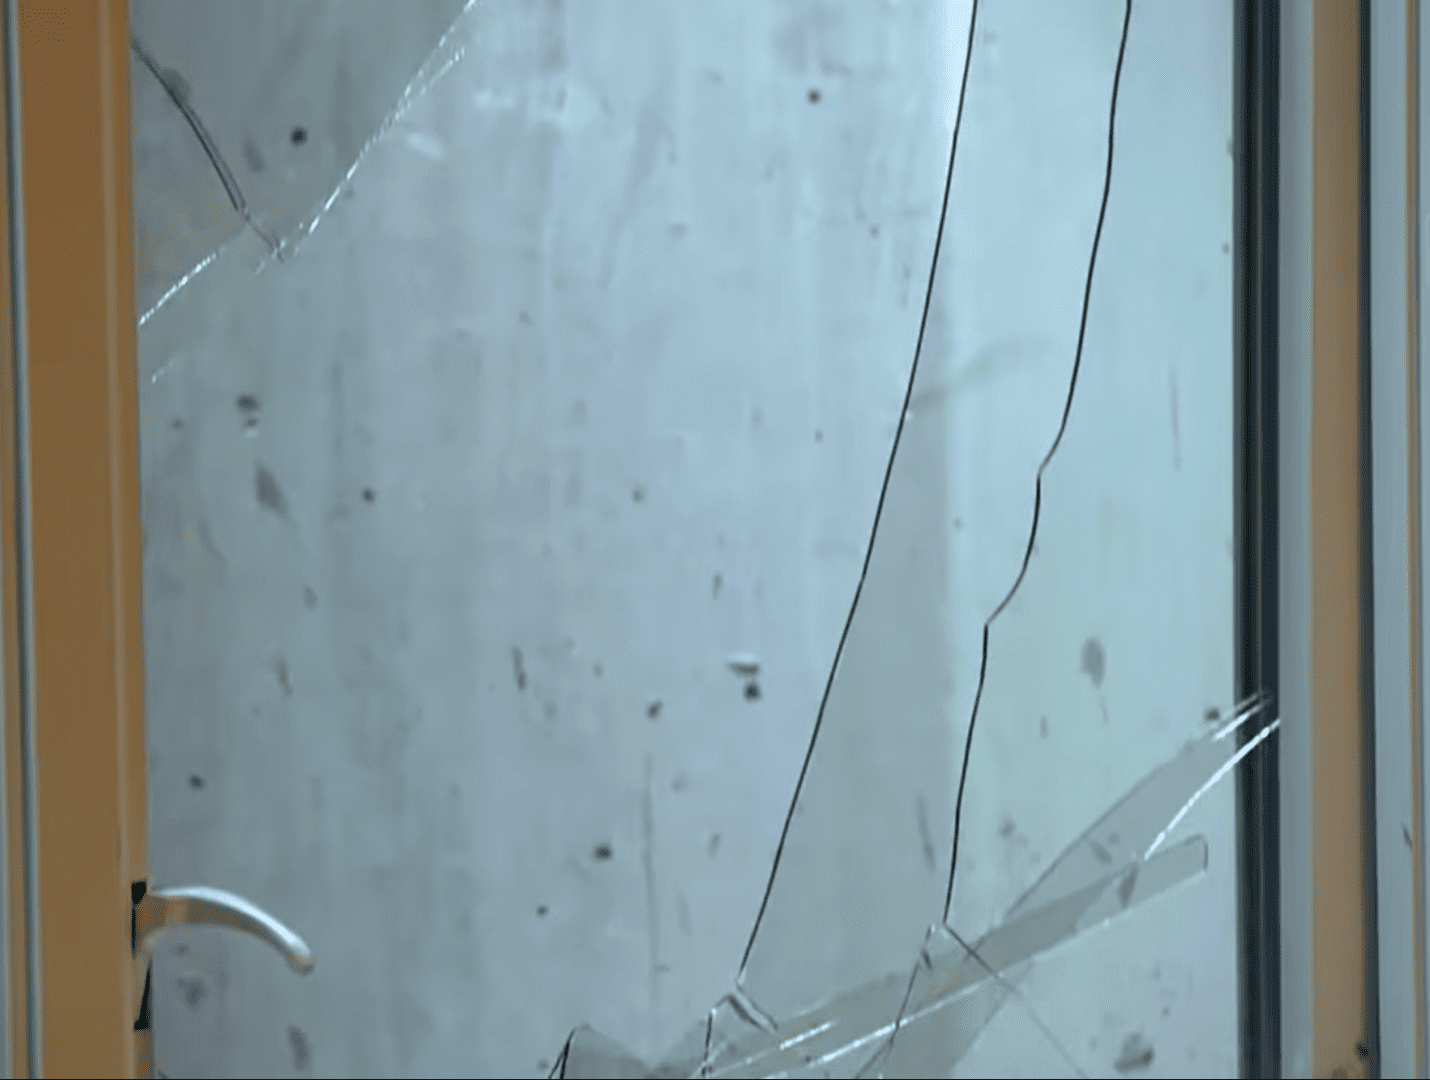 Ein zerbrochenes Fenster. | Quelle: Youtube.com/Inside Edition - Twitter.com/InsideEdition